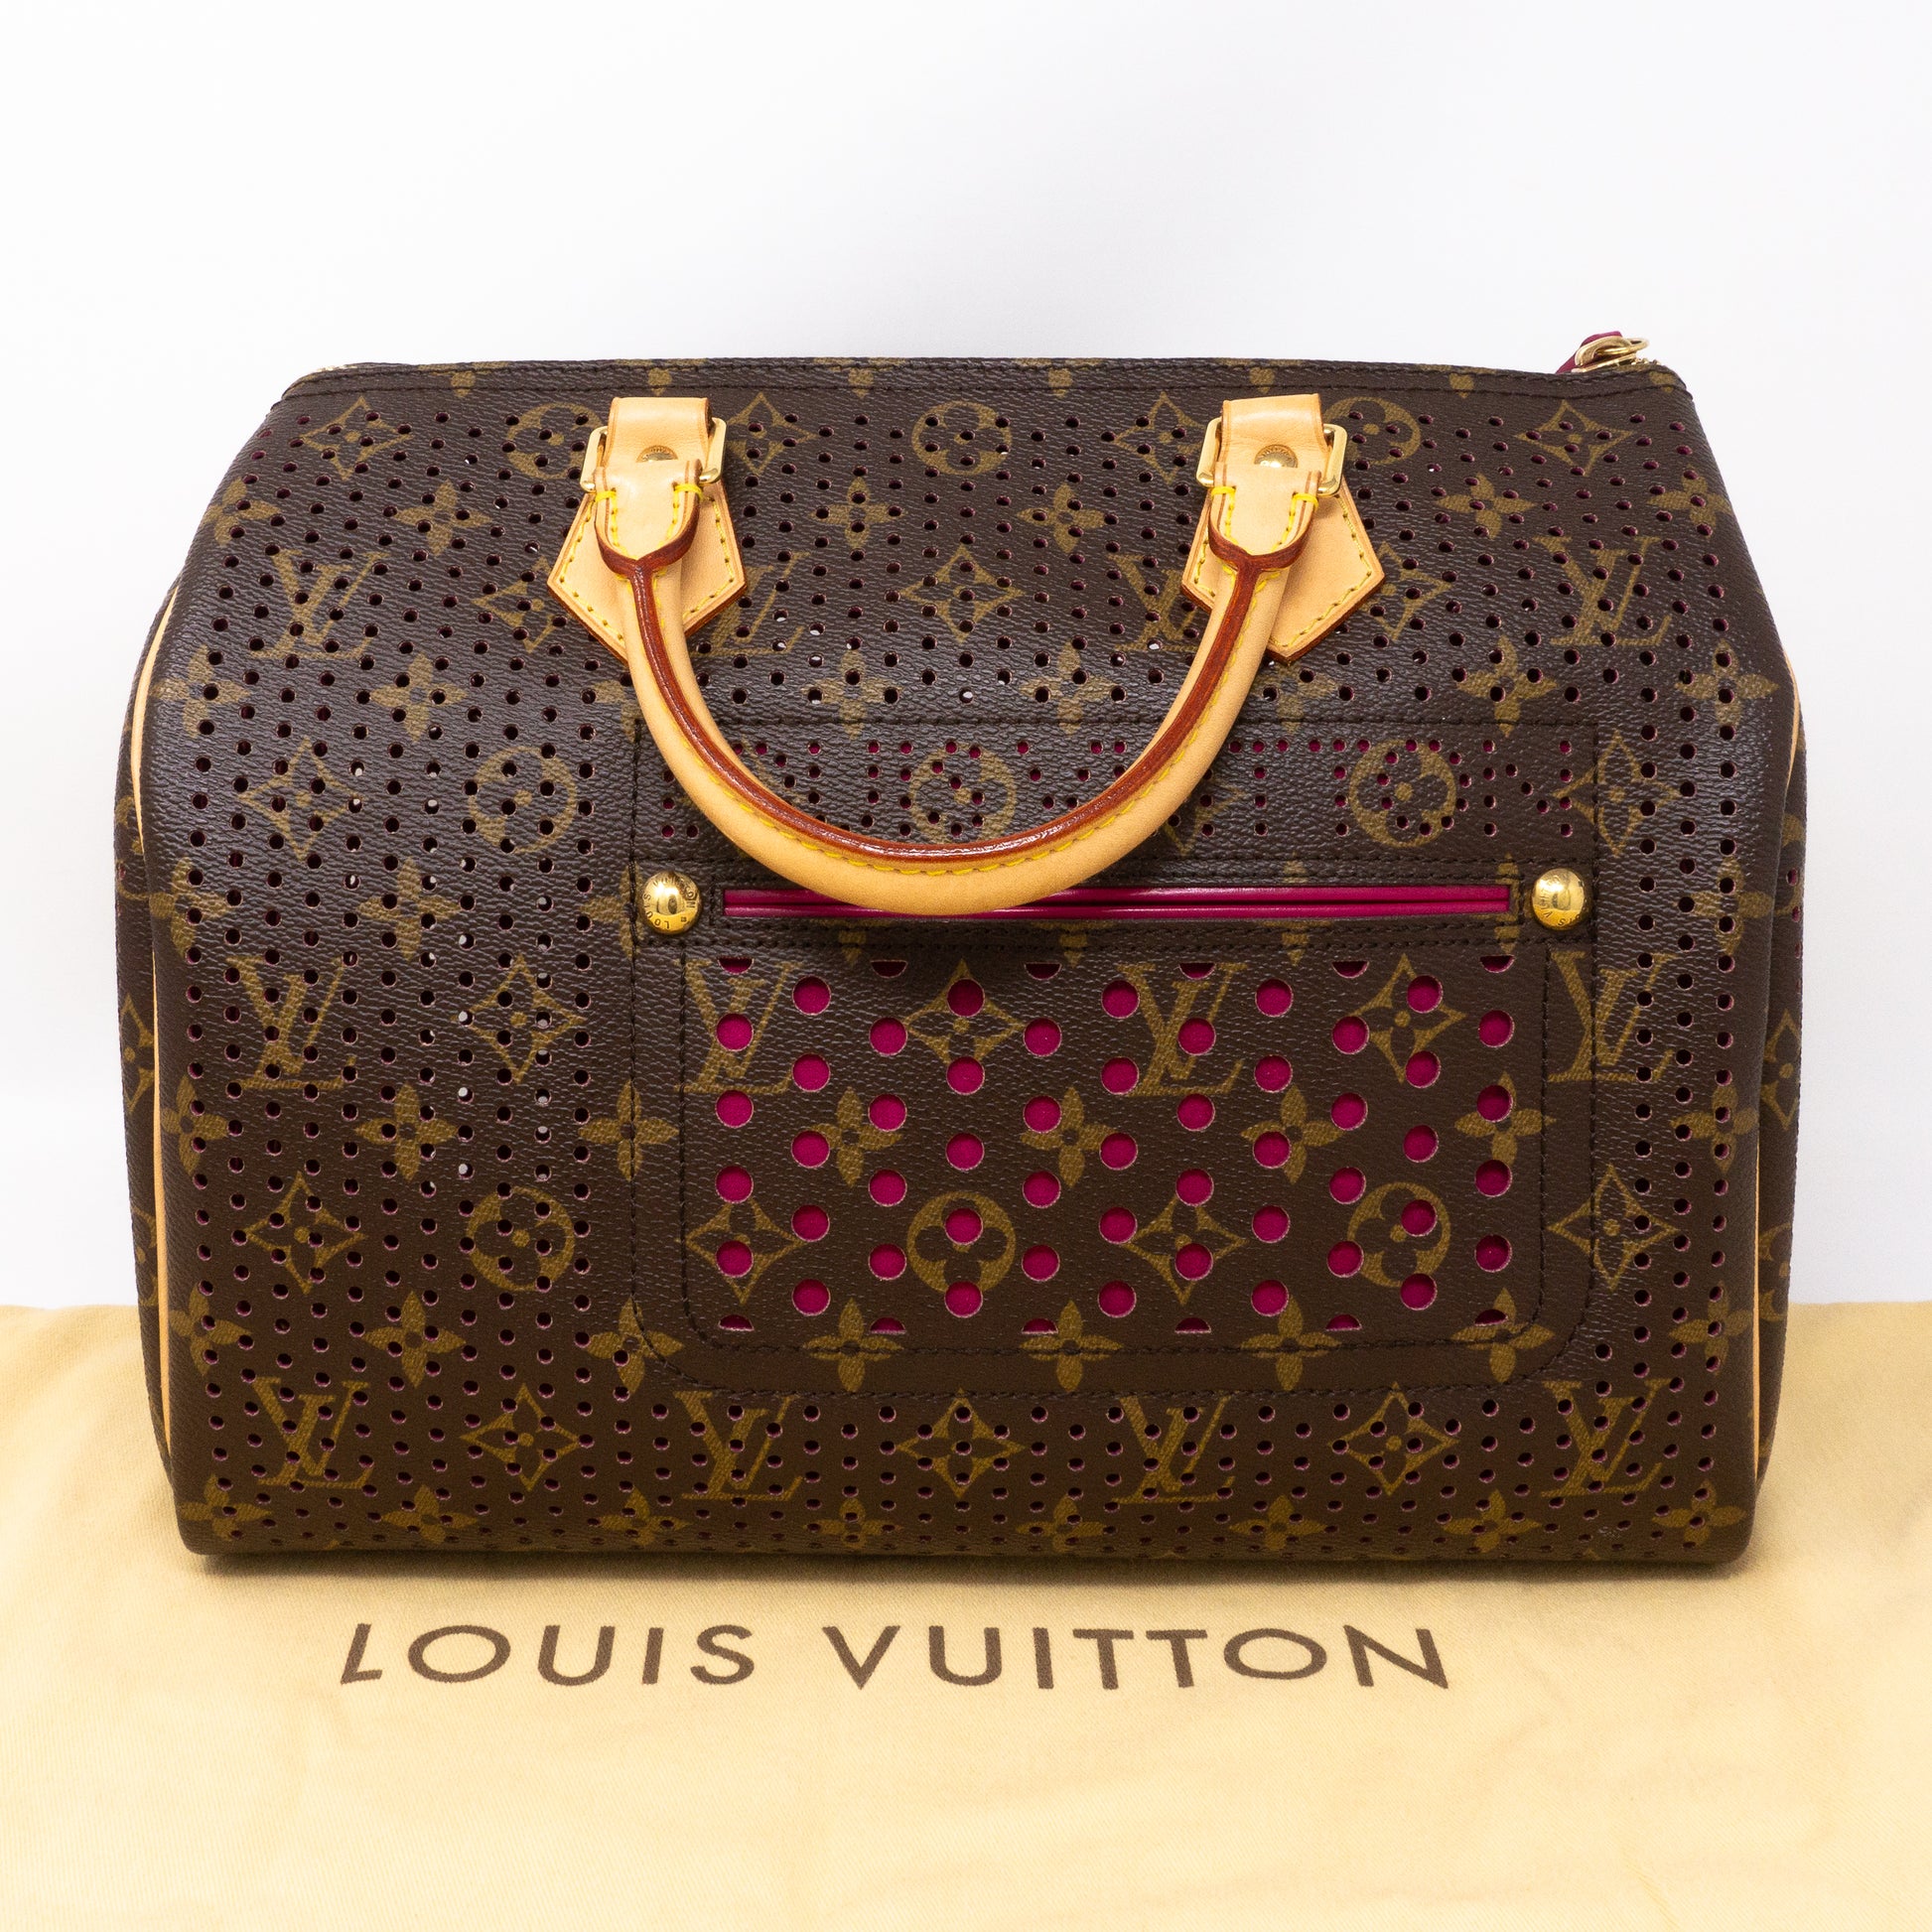 Louis Vuitton – Speedy 30 Monogram Perforated – Queen Station